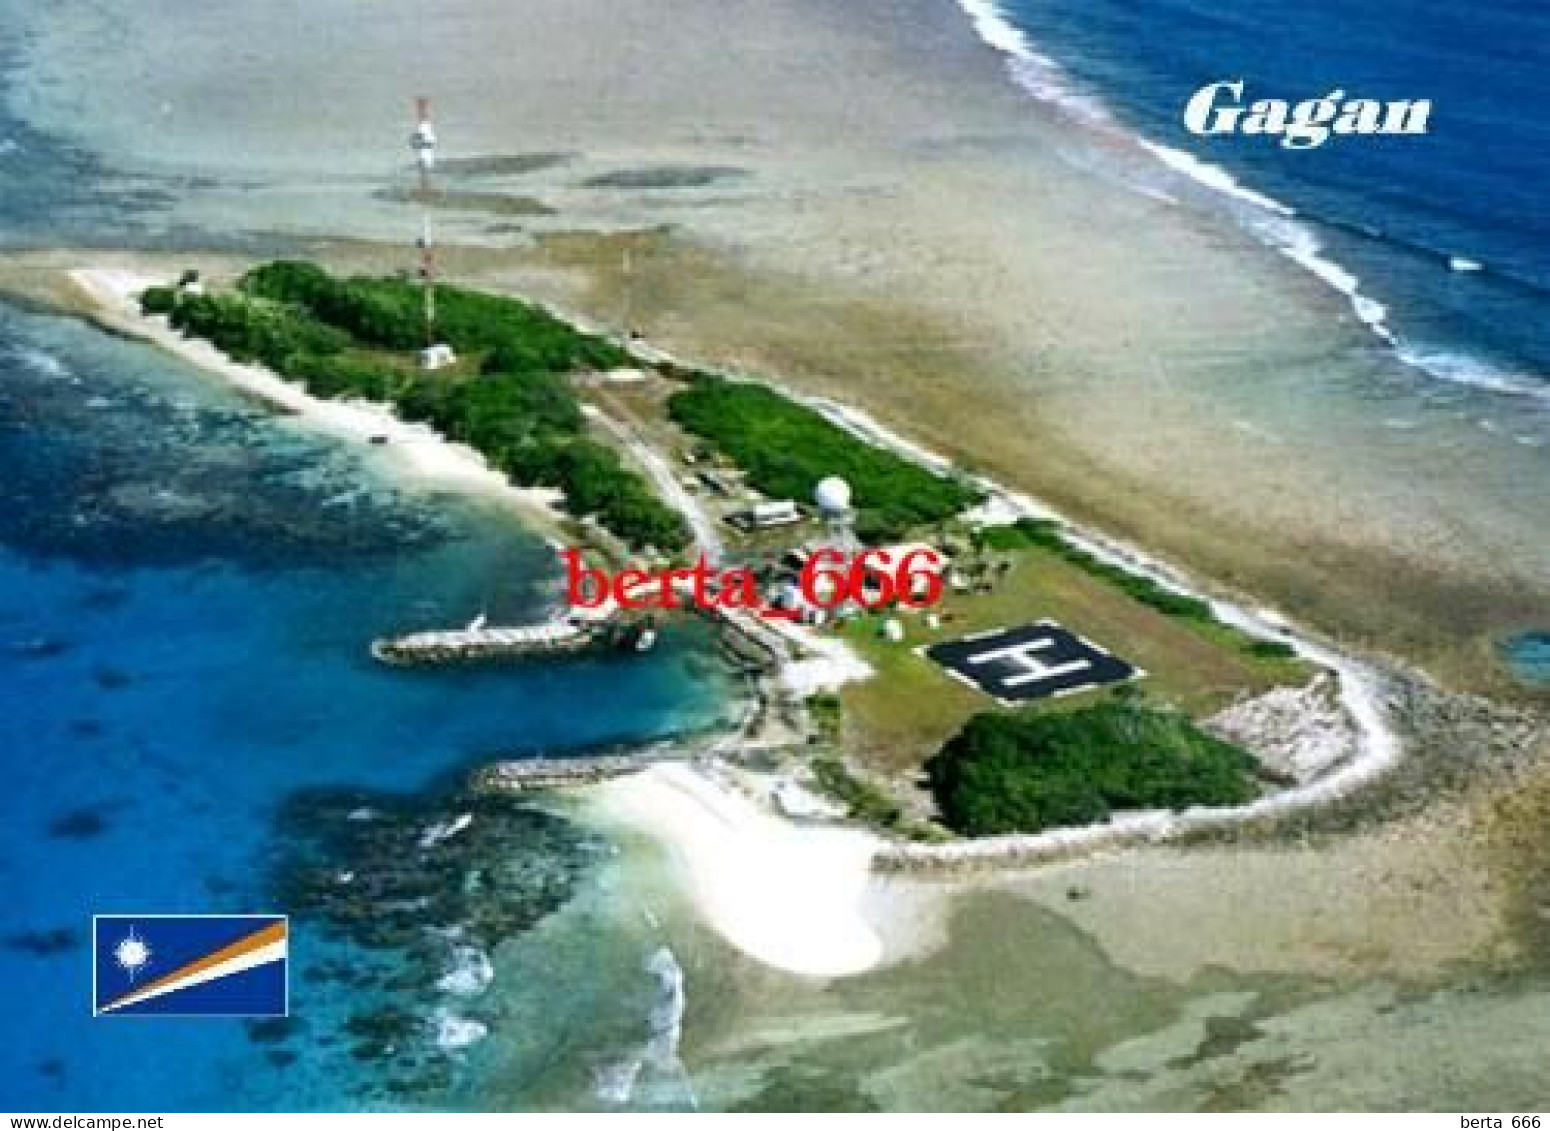 Marshall Islands Gagan Aerial View New Postcard - Isole Marshall